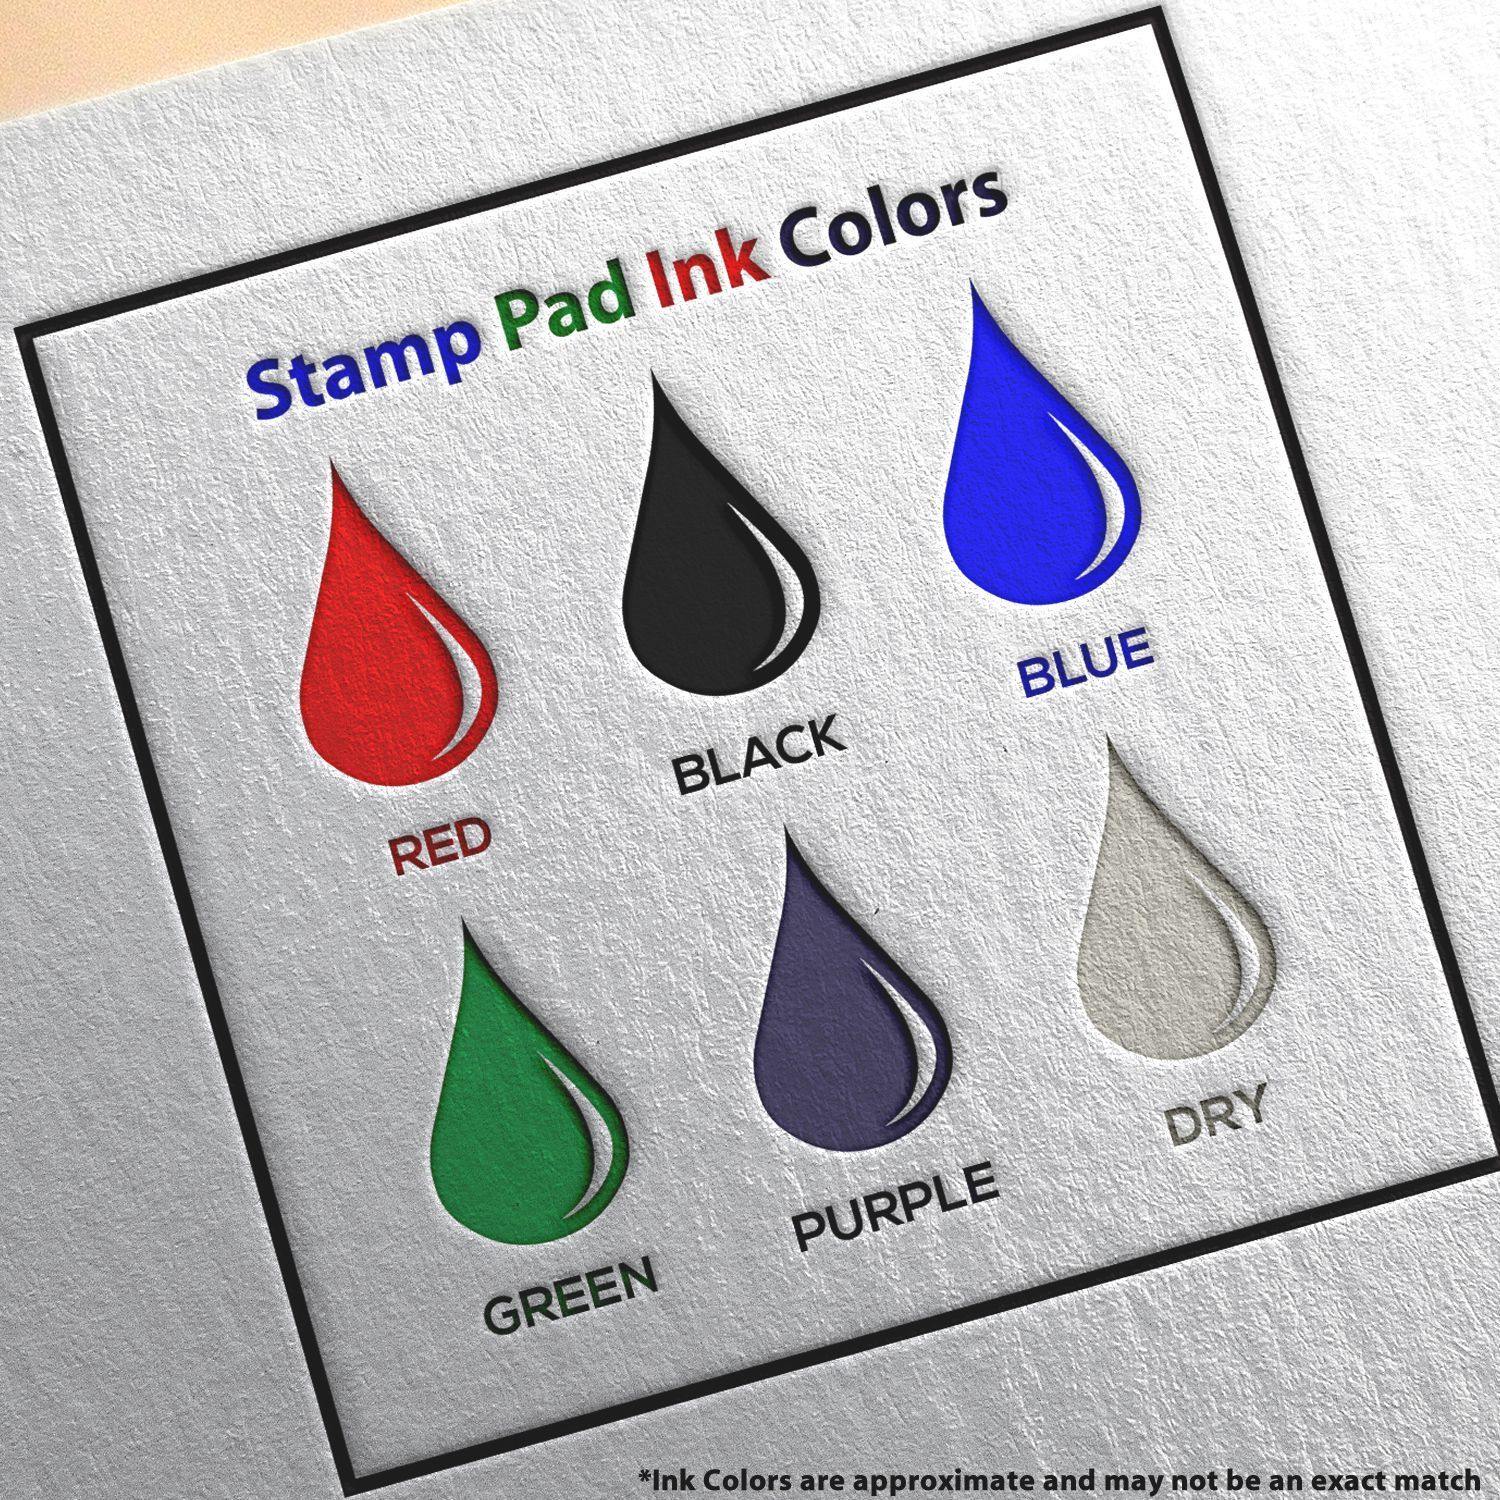 Stamp Pad & Ink